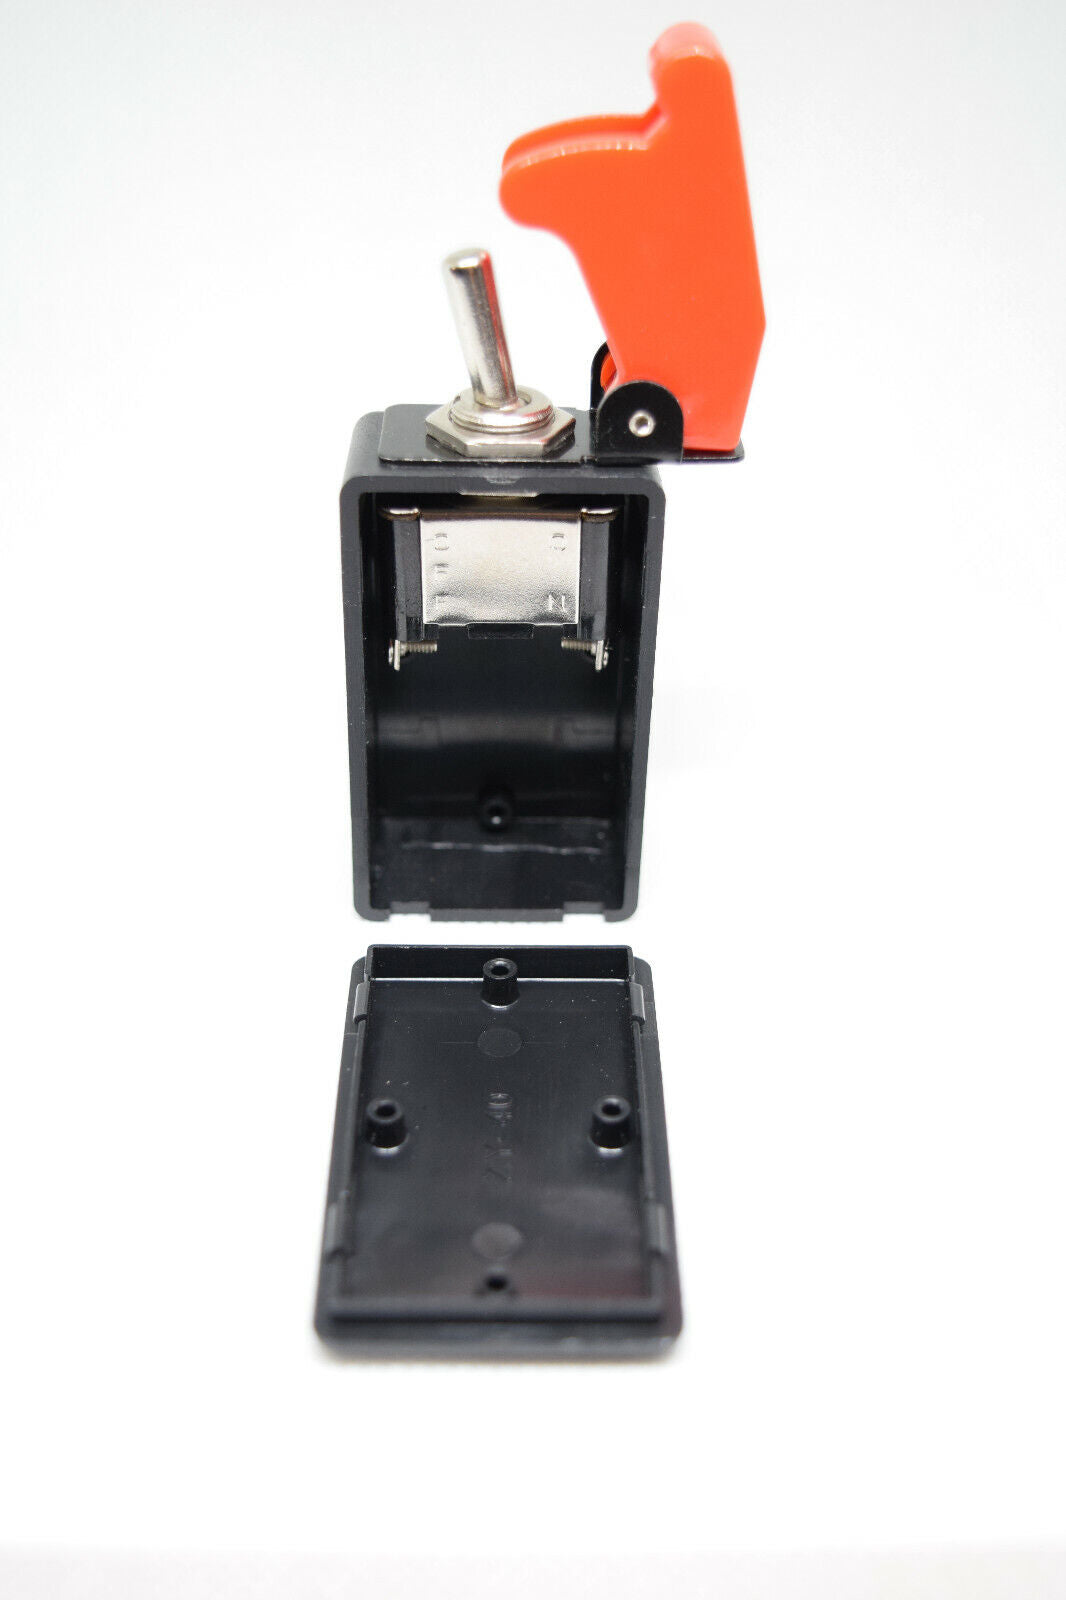 Custom Remote Bomb Detonator (C4, Plastic Explosive) Prop for Cosplay or Theater